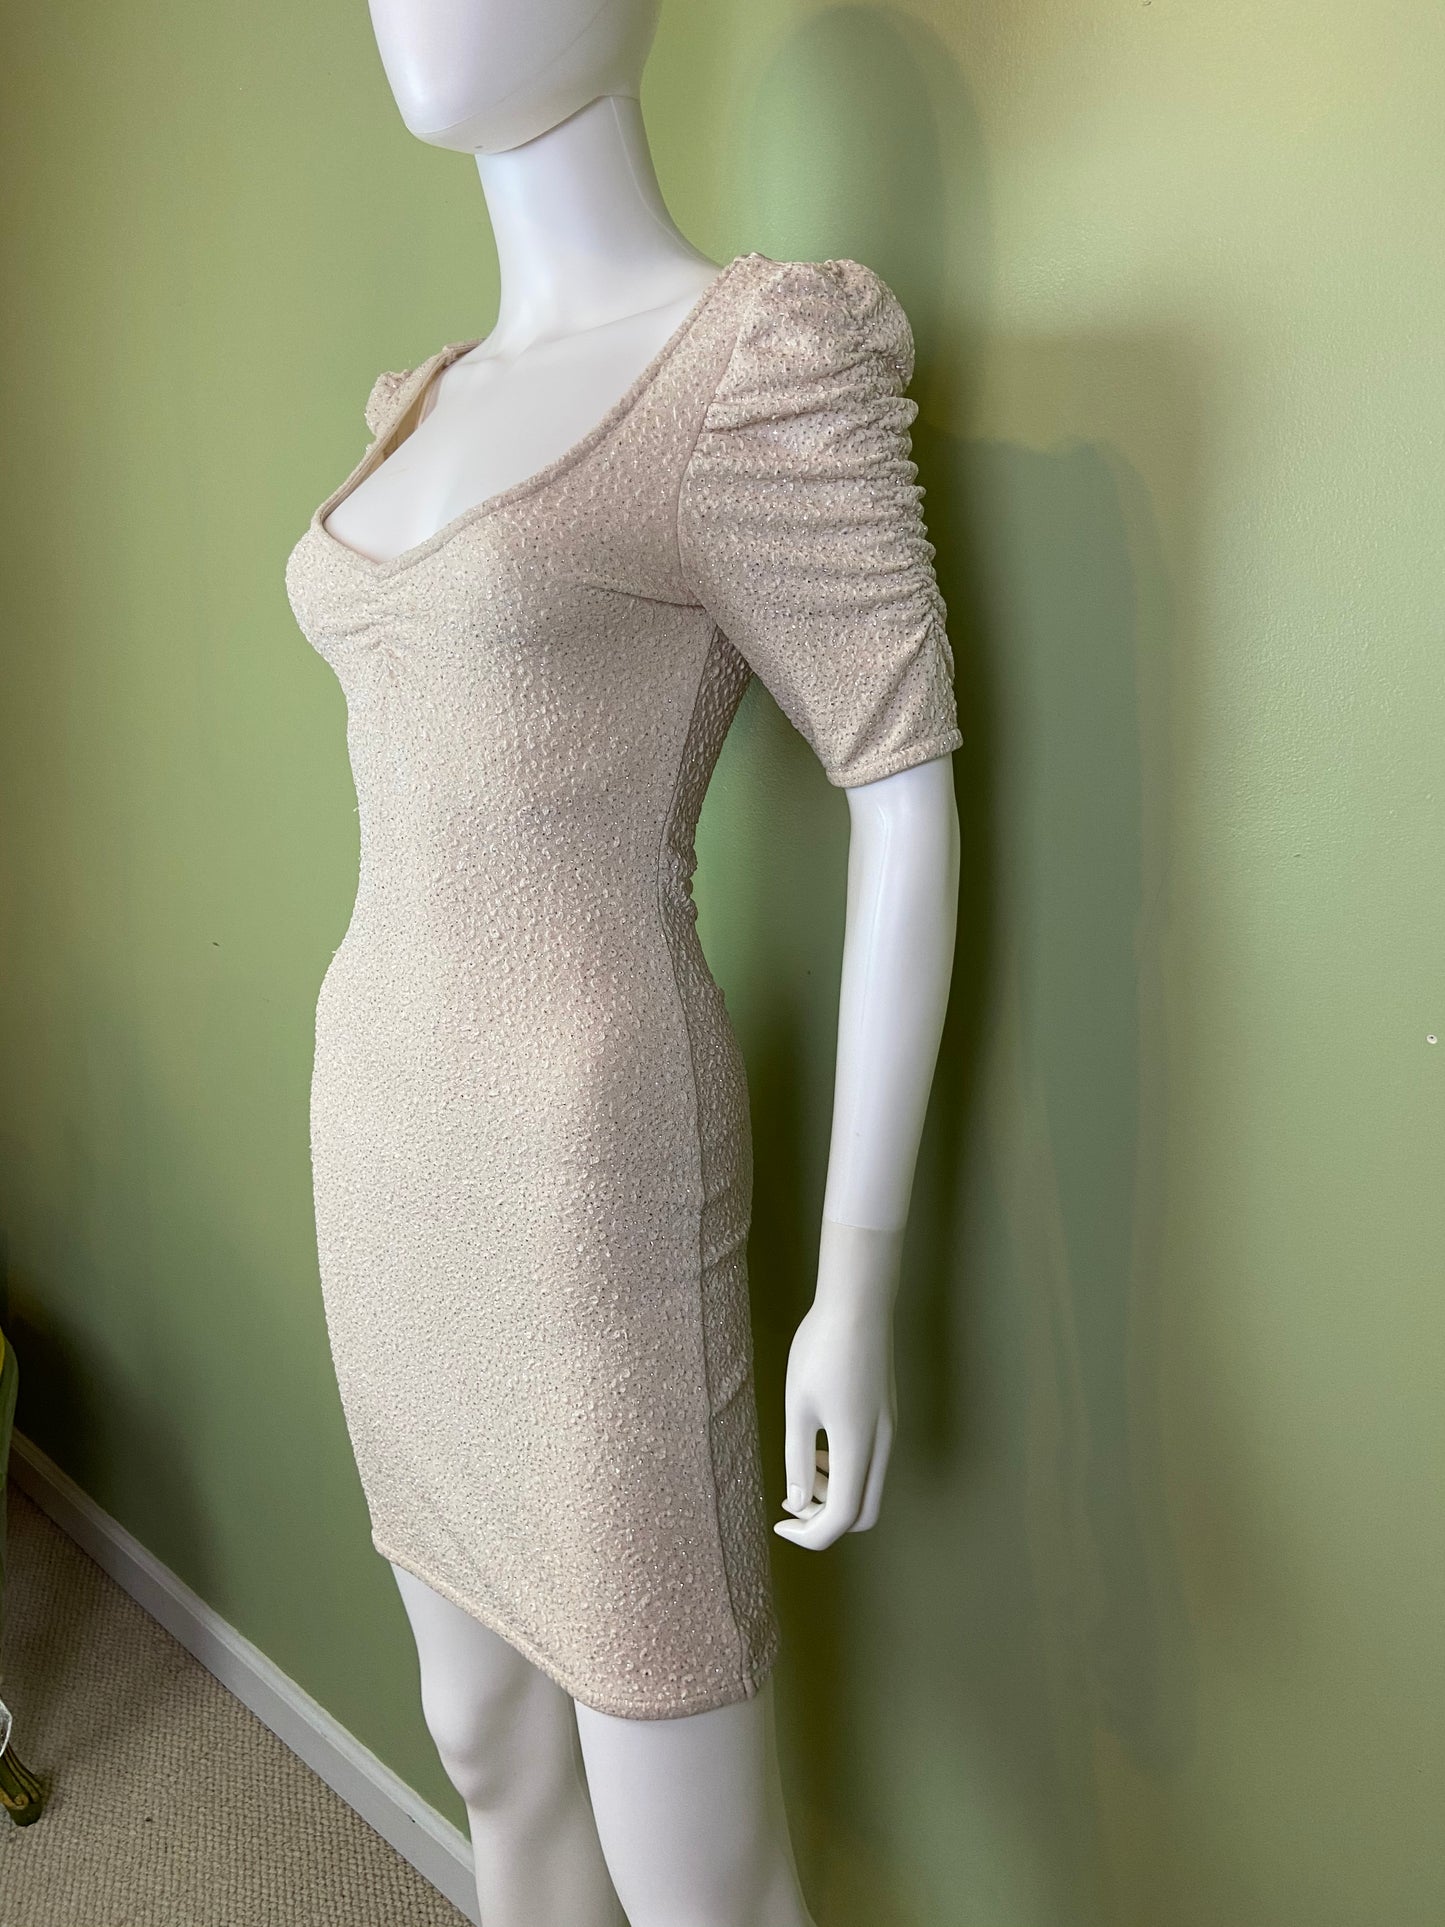 Glittery Beige Textured Stretch Cocktail Dress